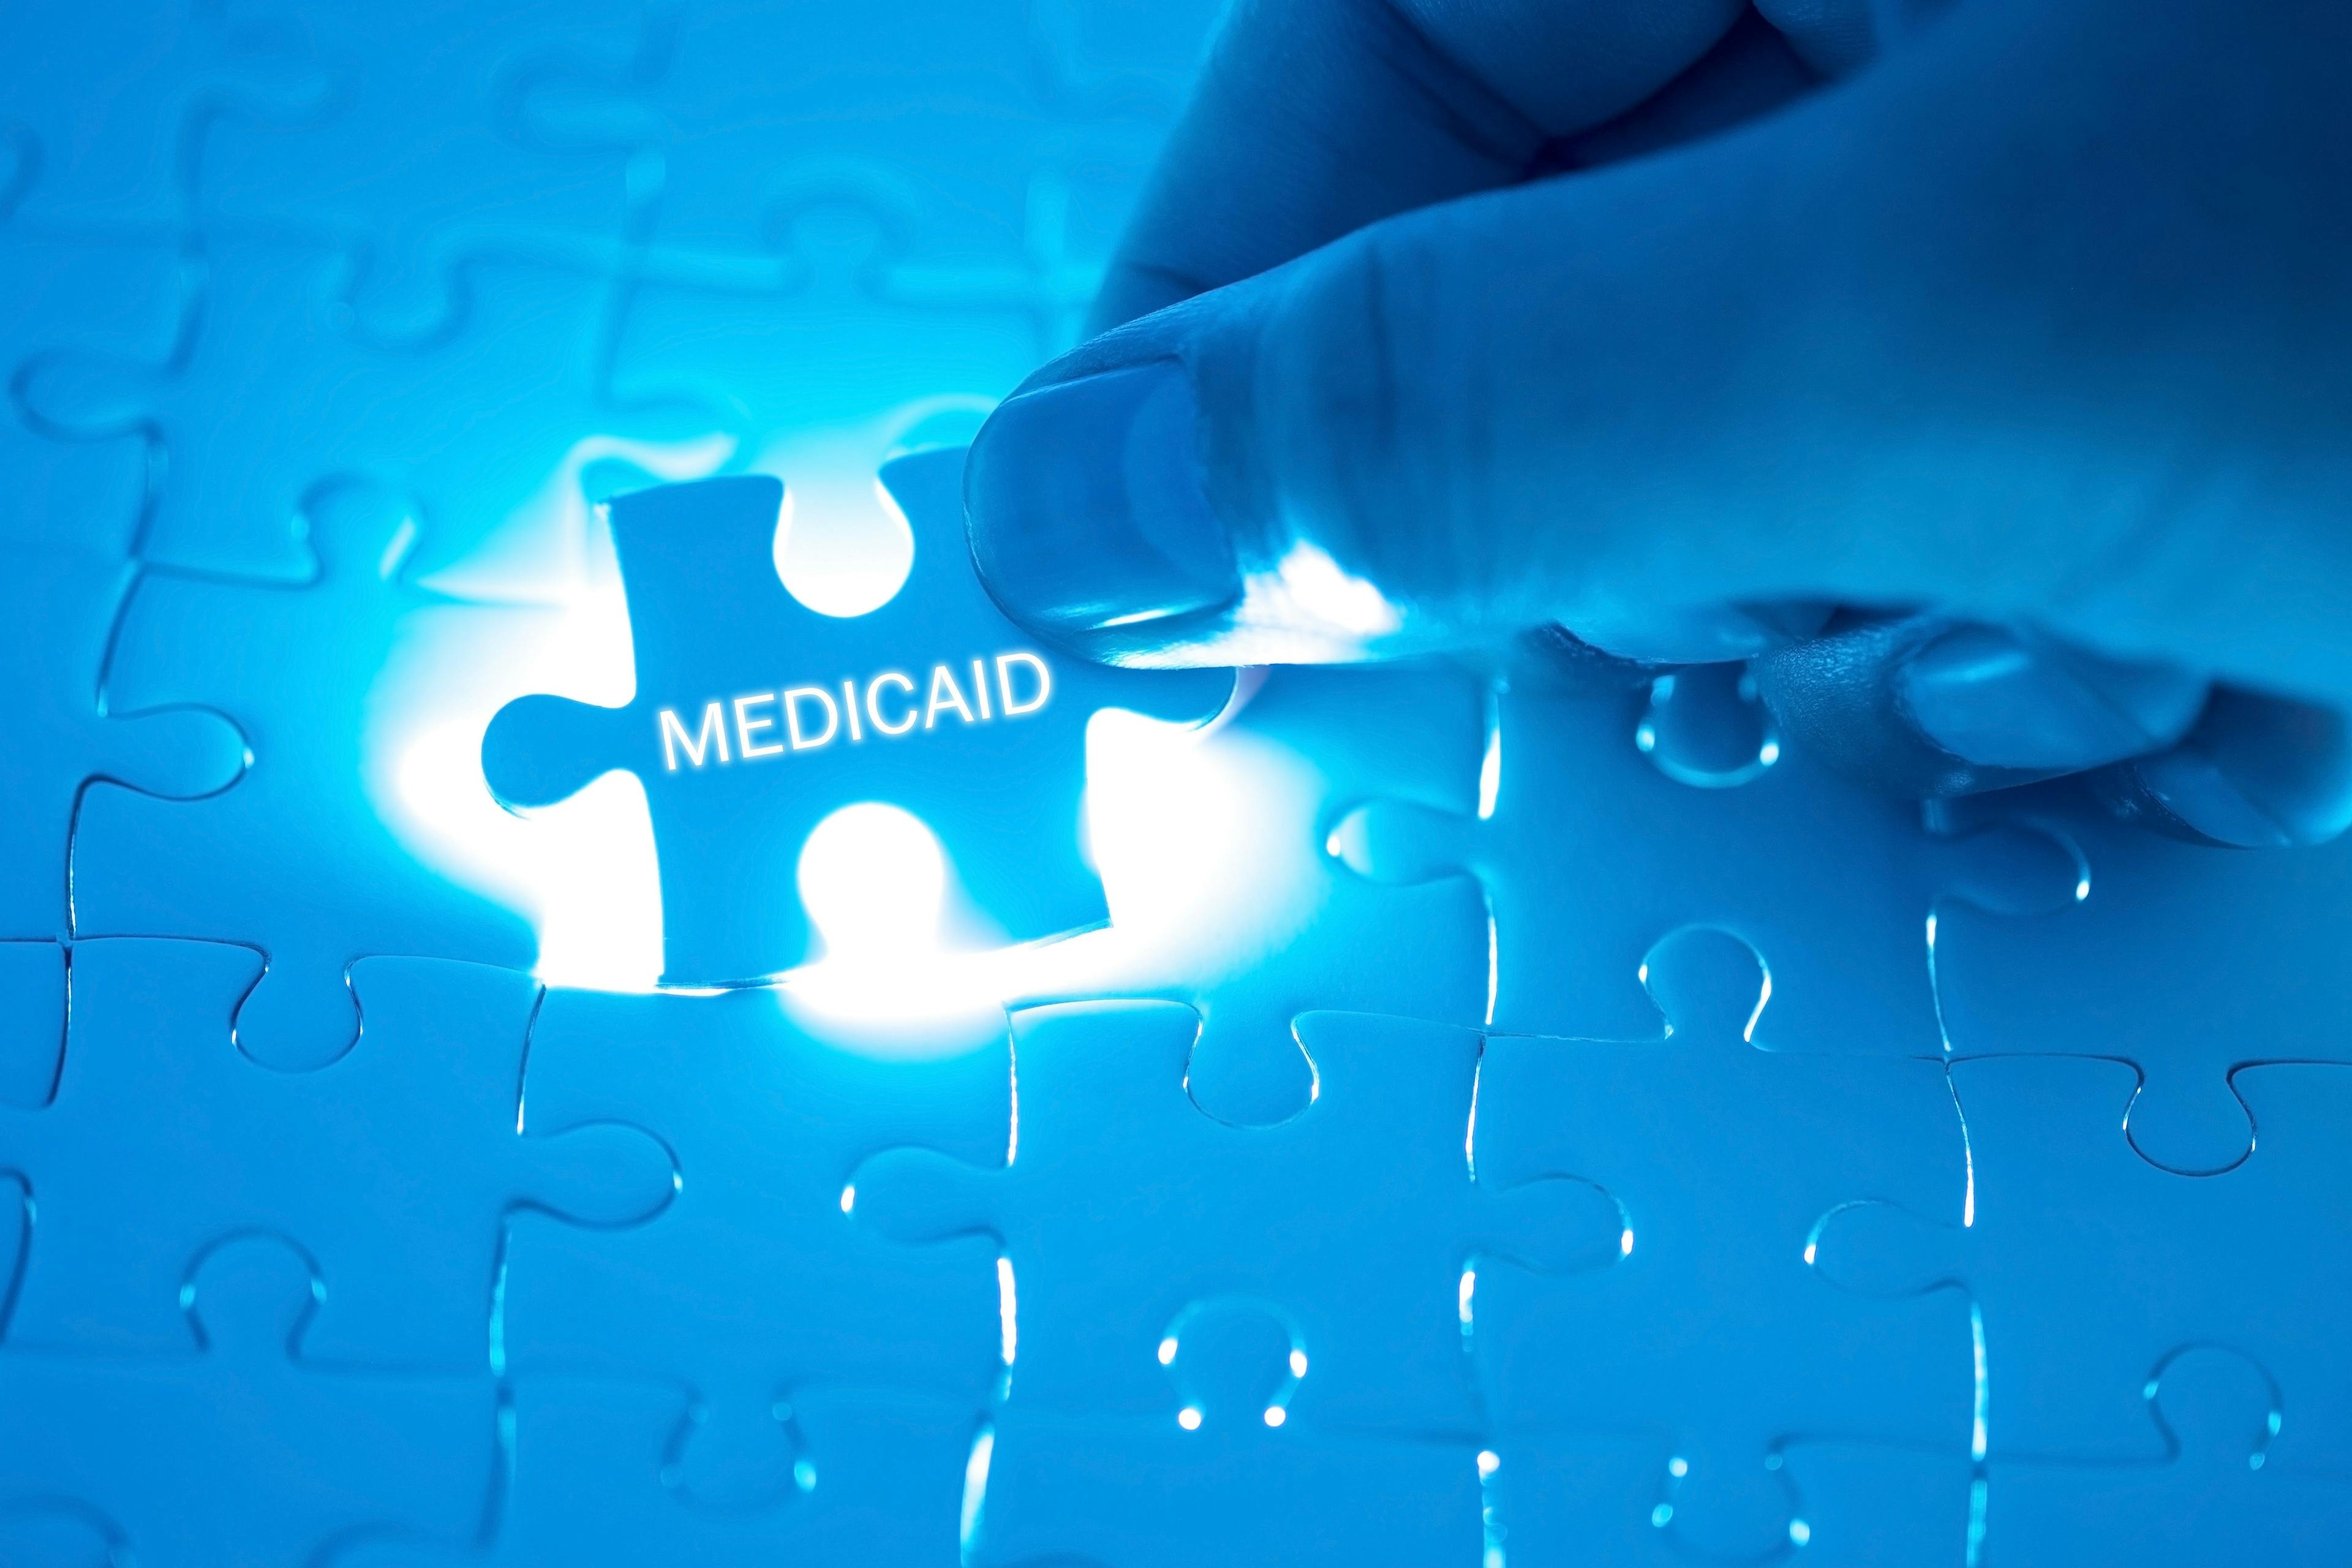 Medicaid puzzle | image credit: suthisak - stock.adobe.com